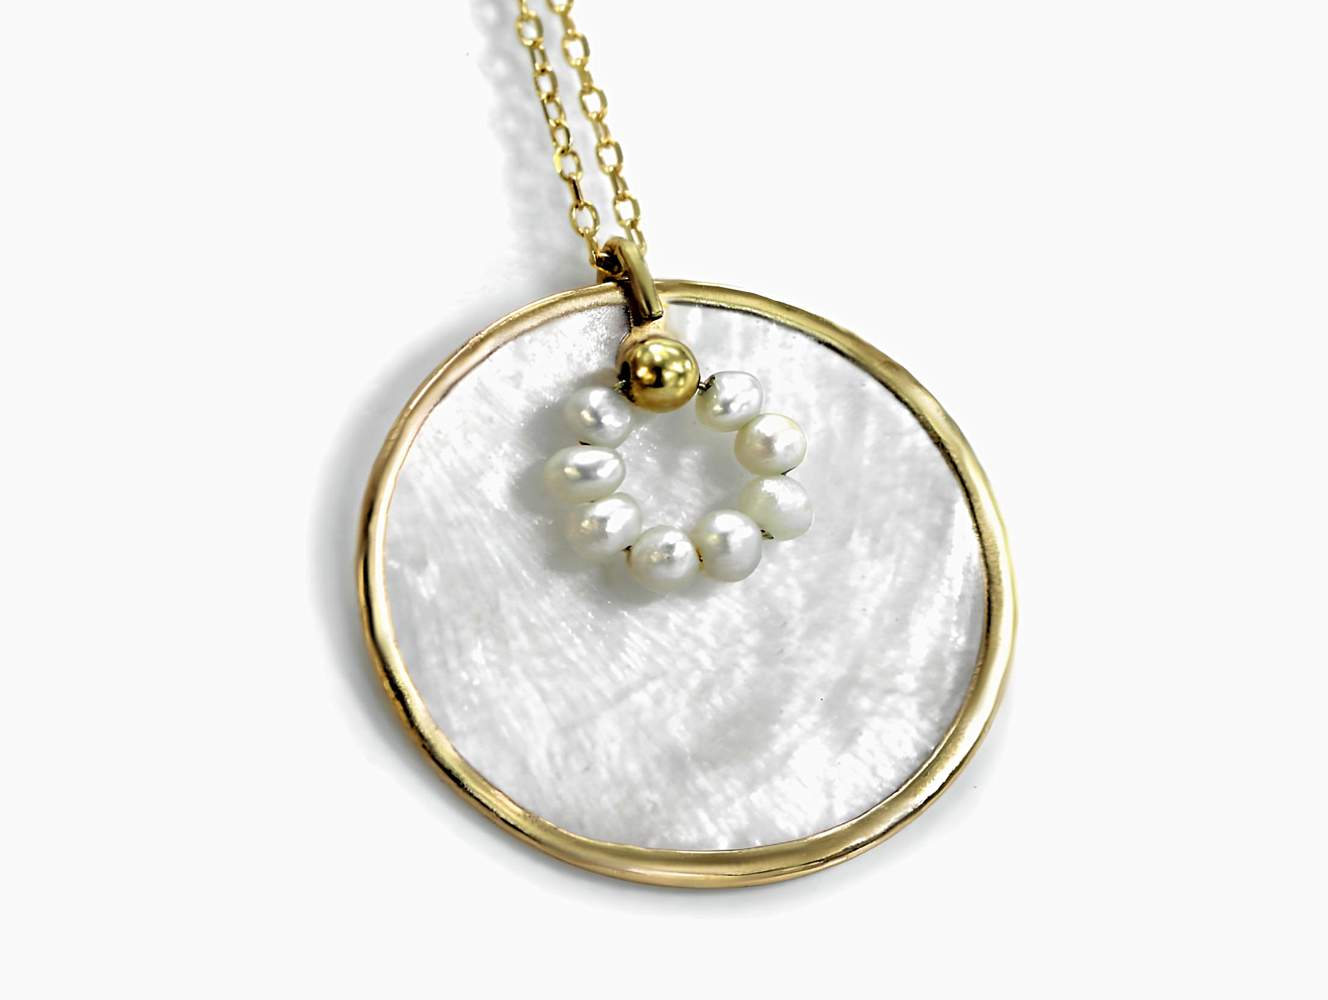 Transparente Perlmutt Anhänger Kette mit Perlen Kreis. Vergoldetes Sterling Silber